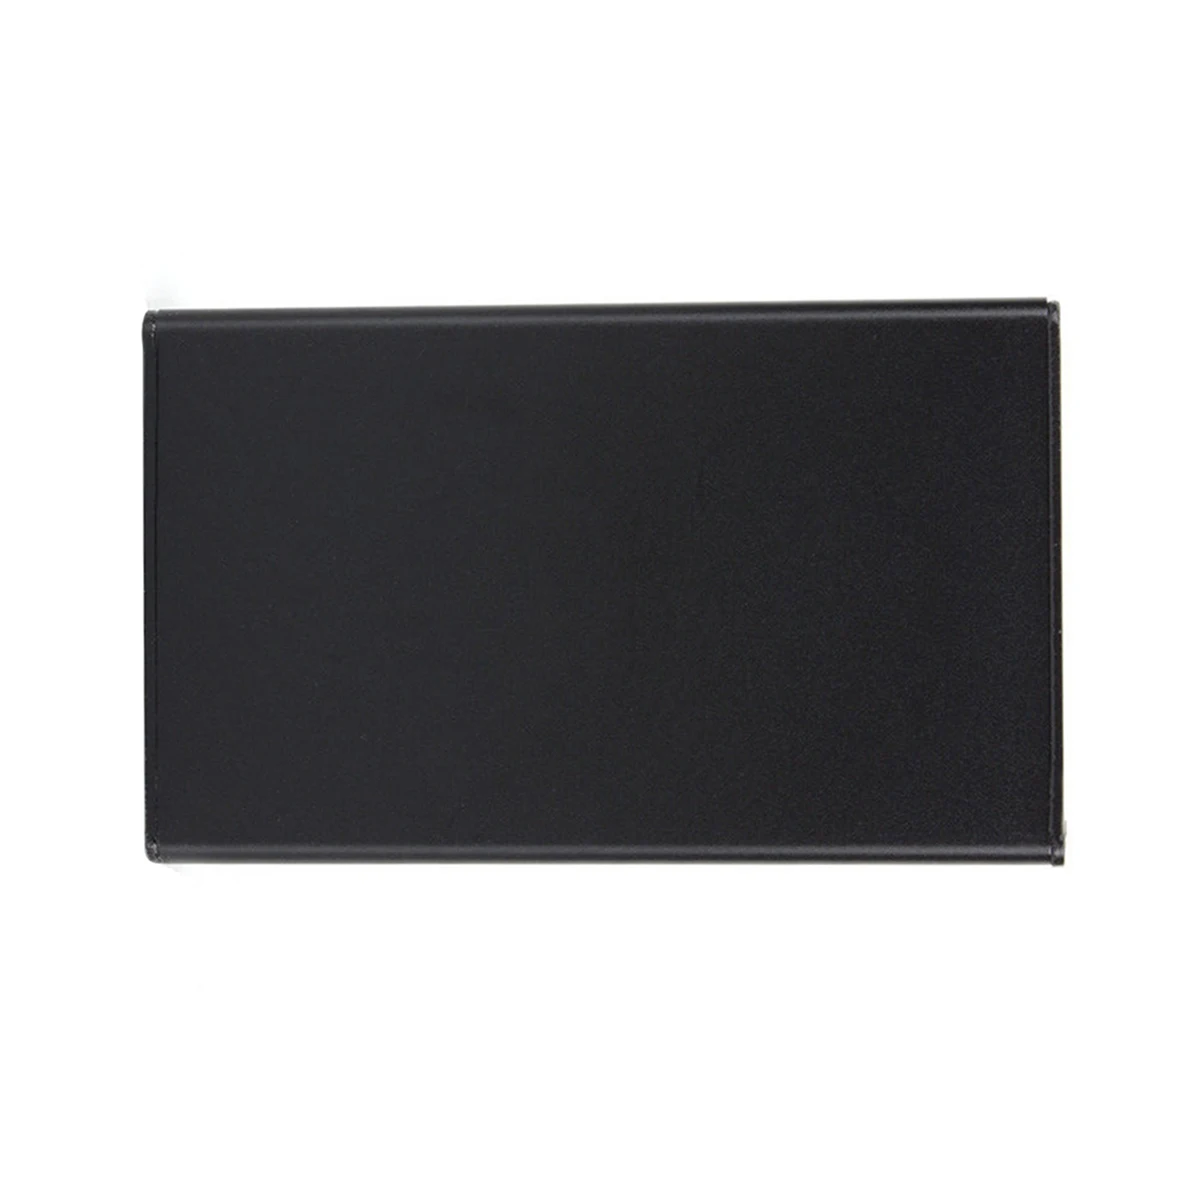 Black Aluminum PCB Instrument Box DIY Electronic Project Enclosure Case 80*50*20mm